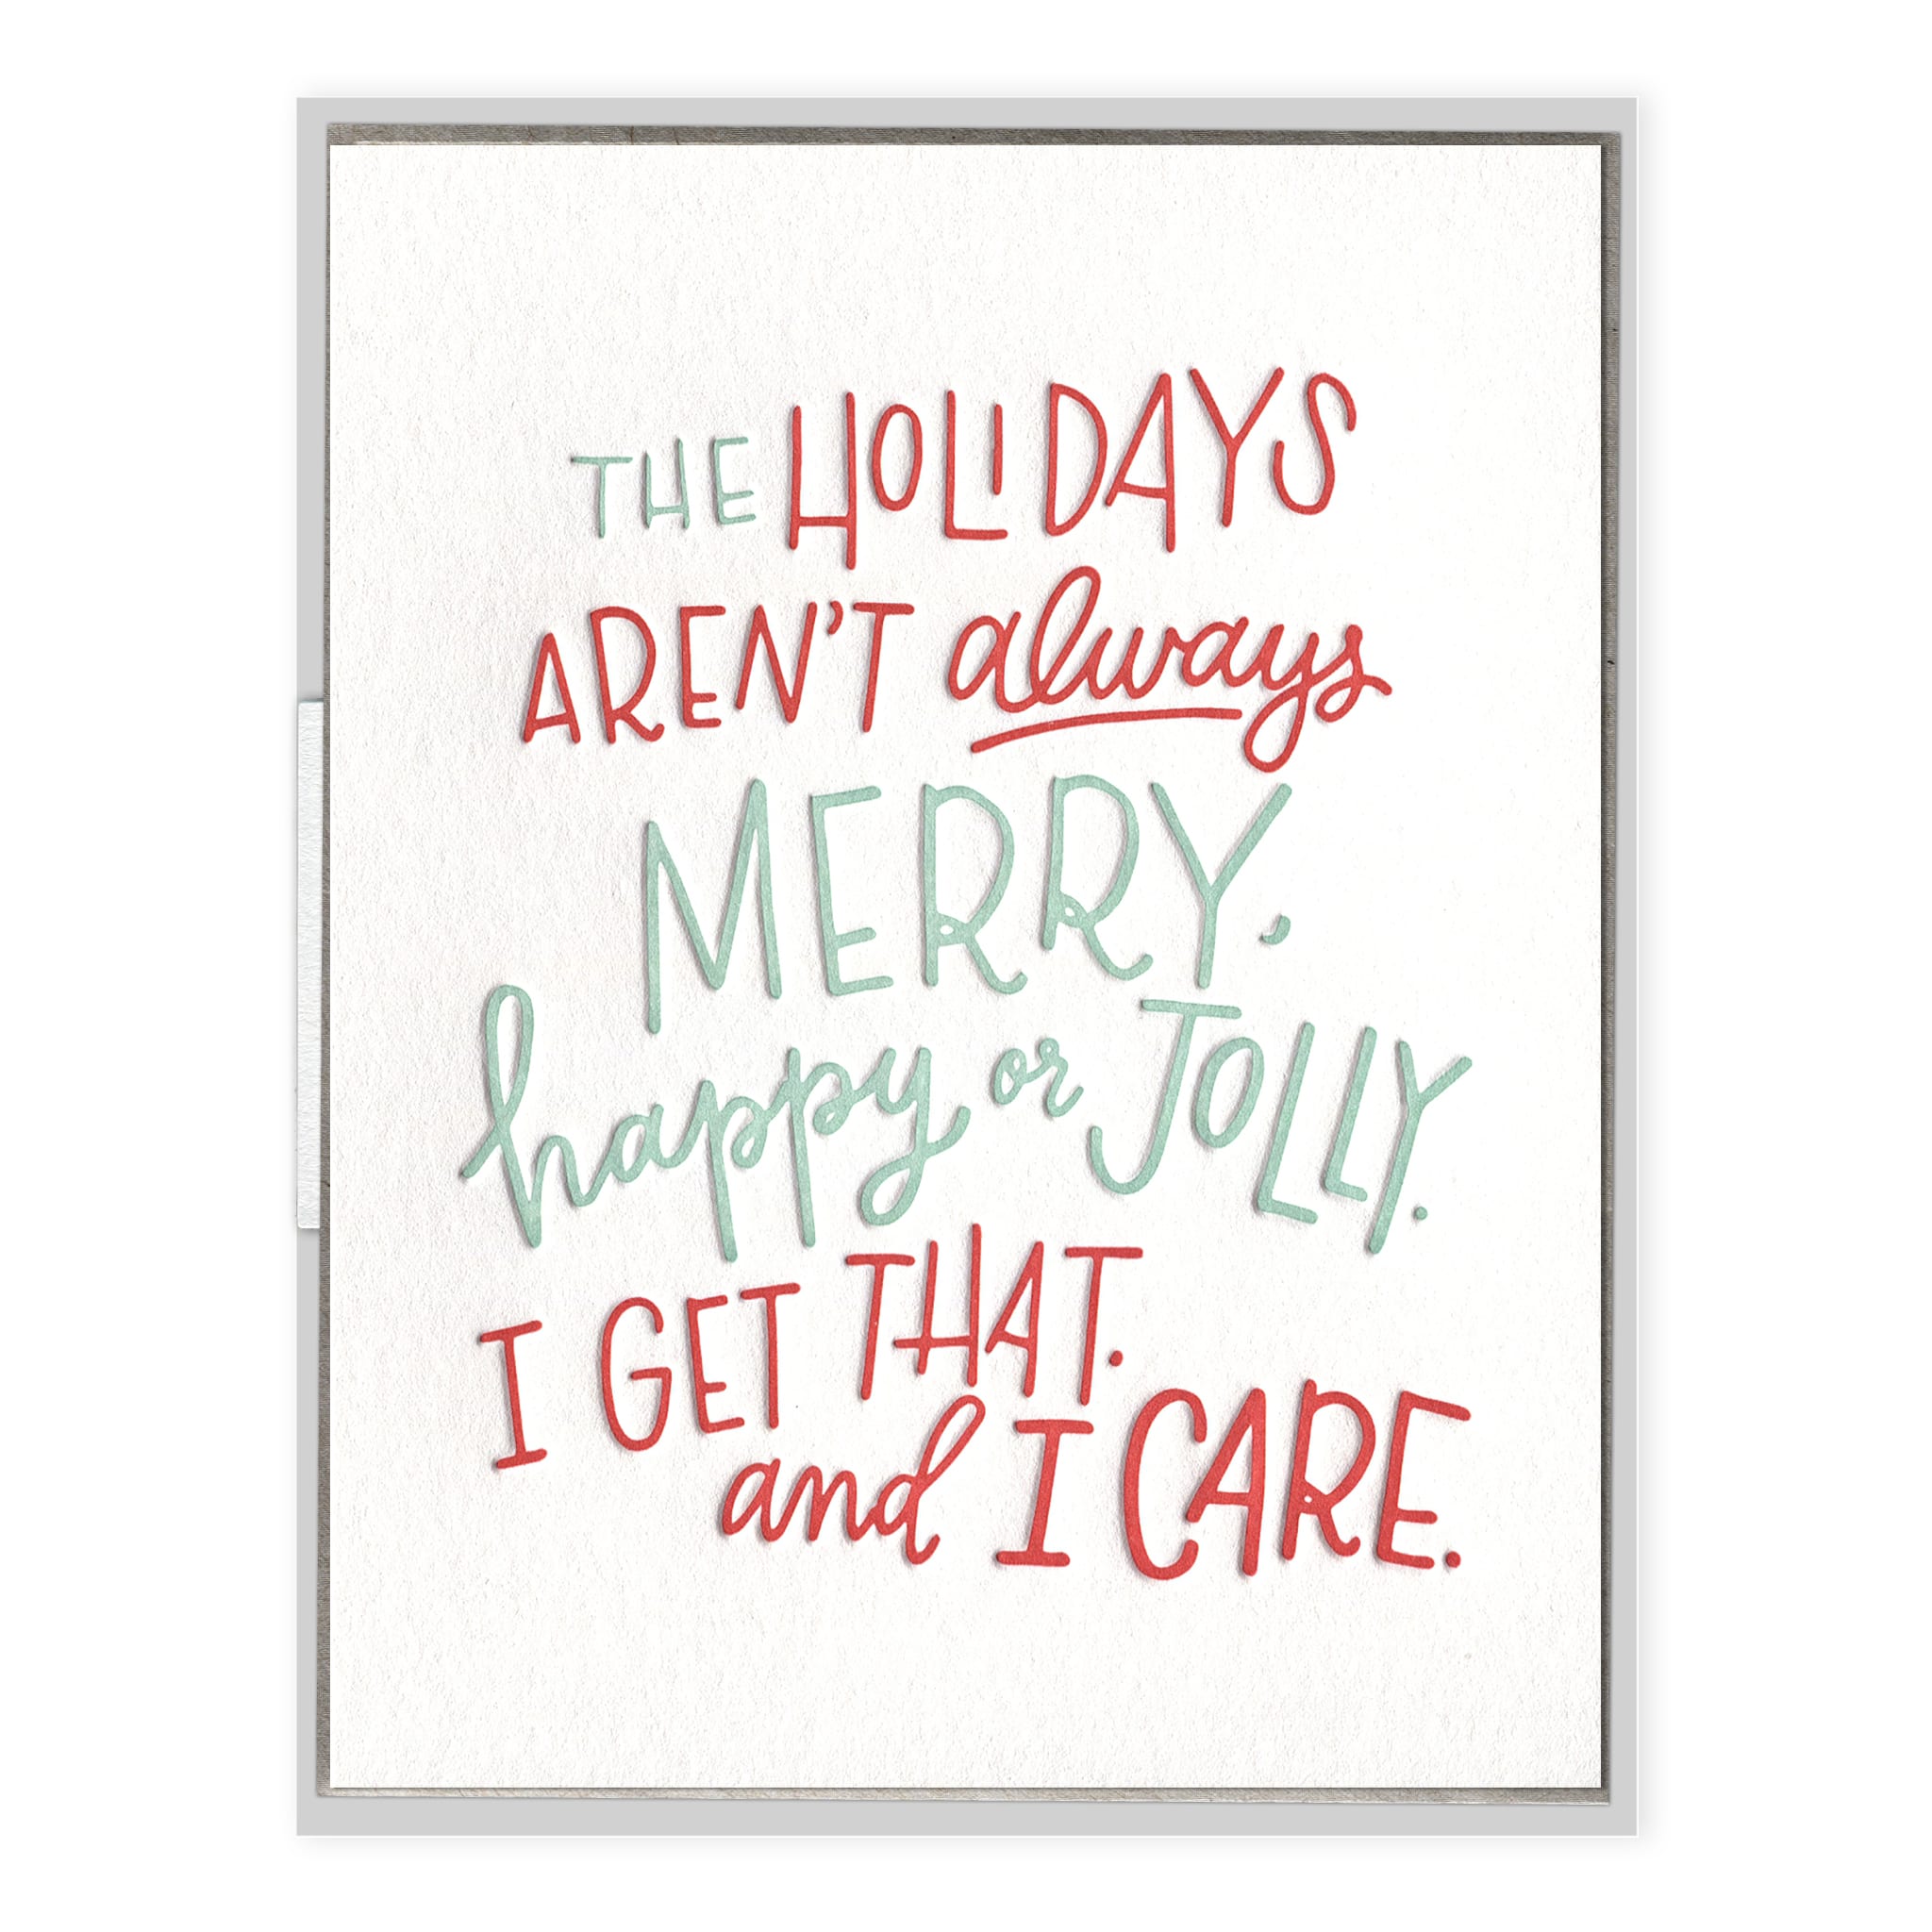 Holidays— I Care Letterpress Greeting Card